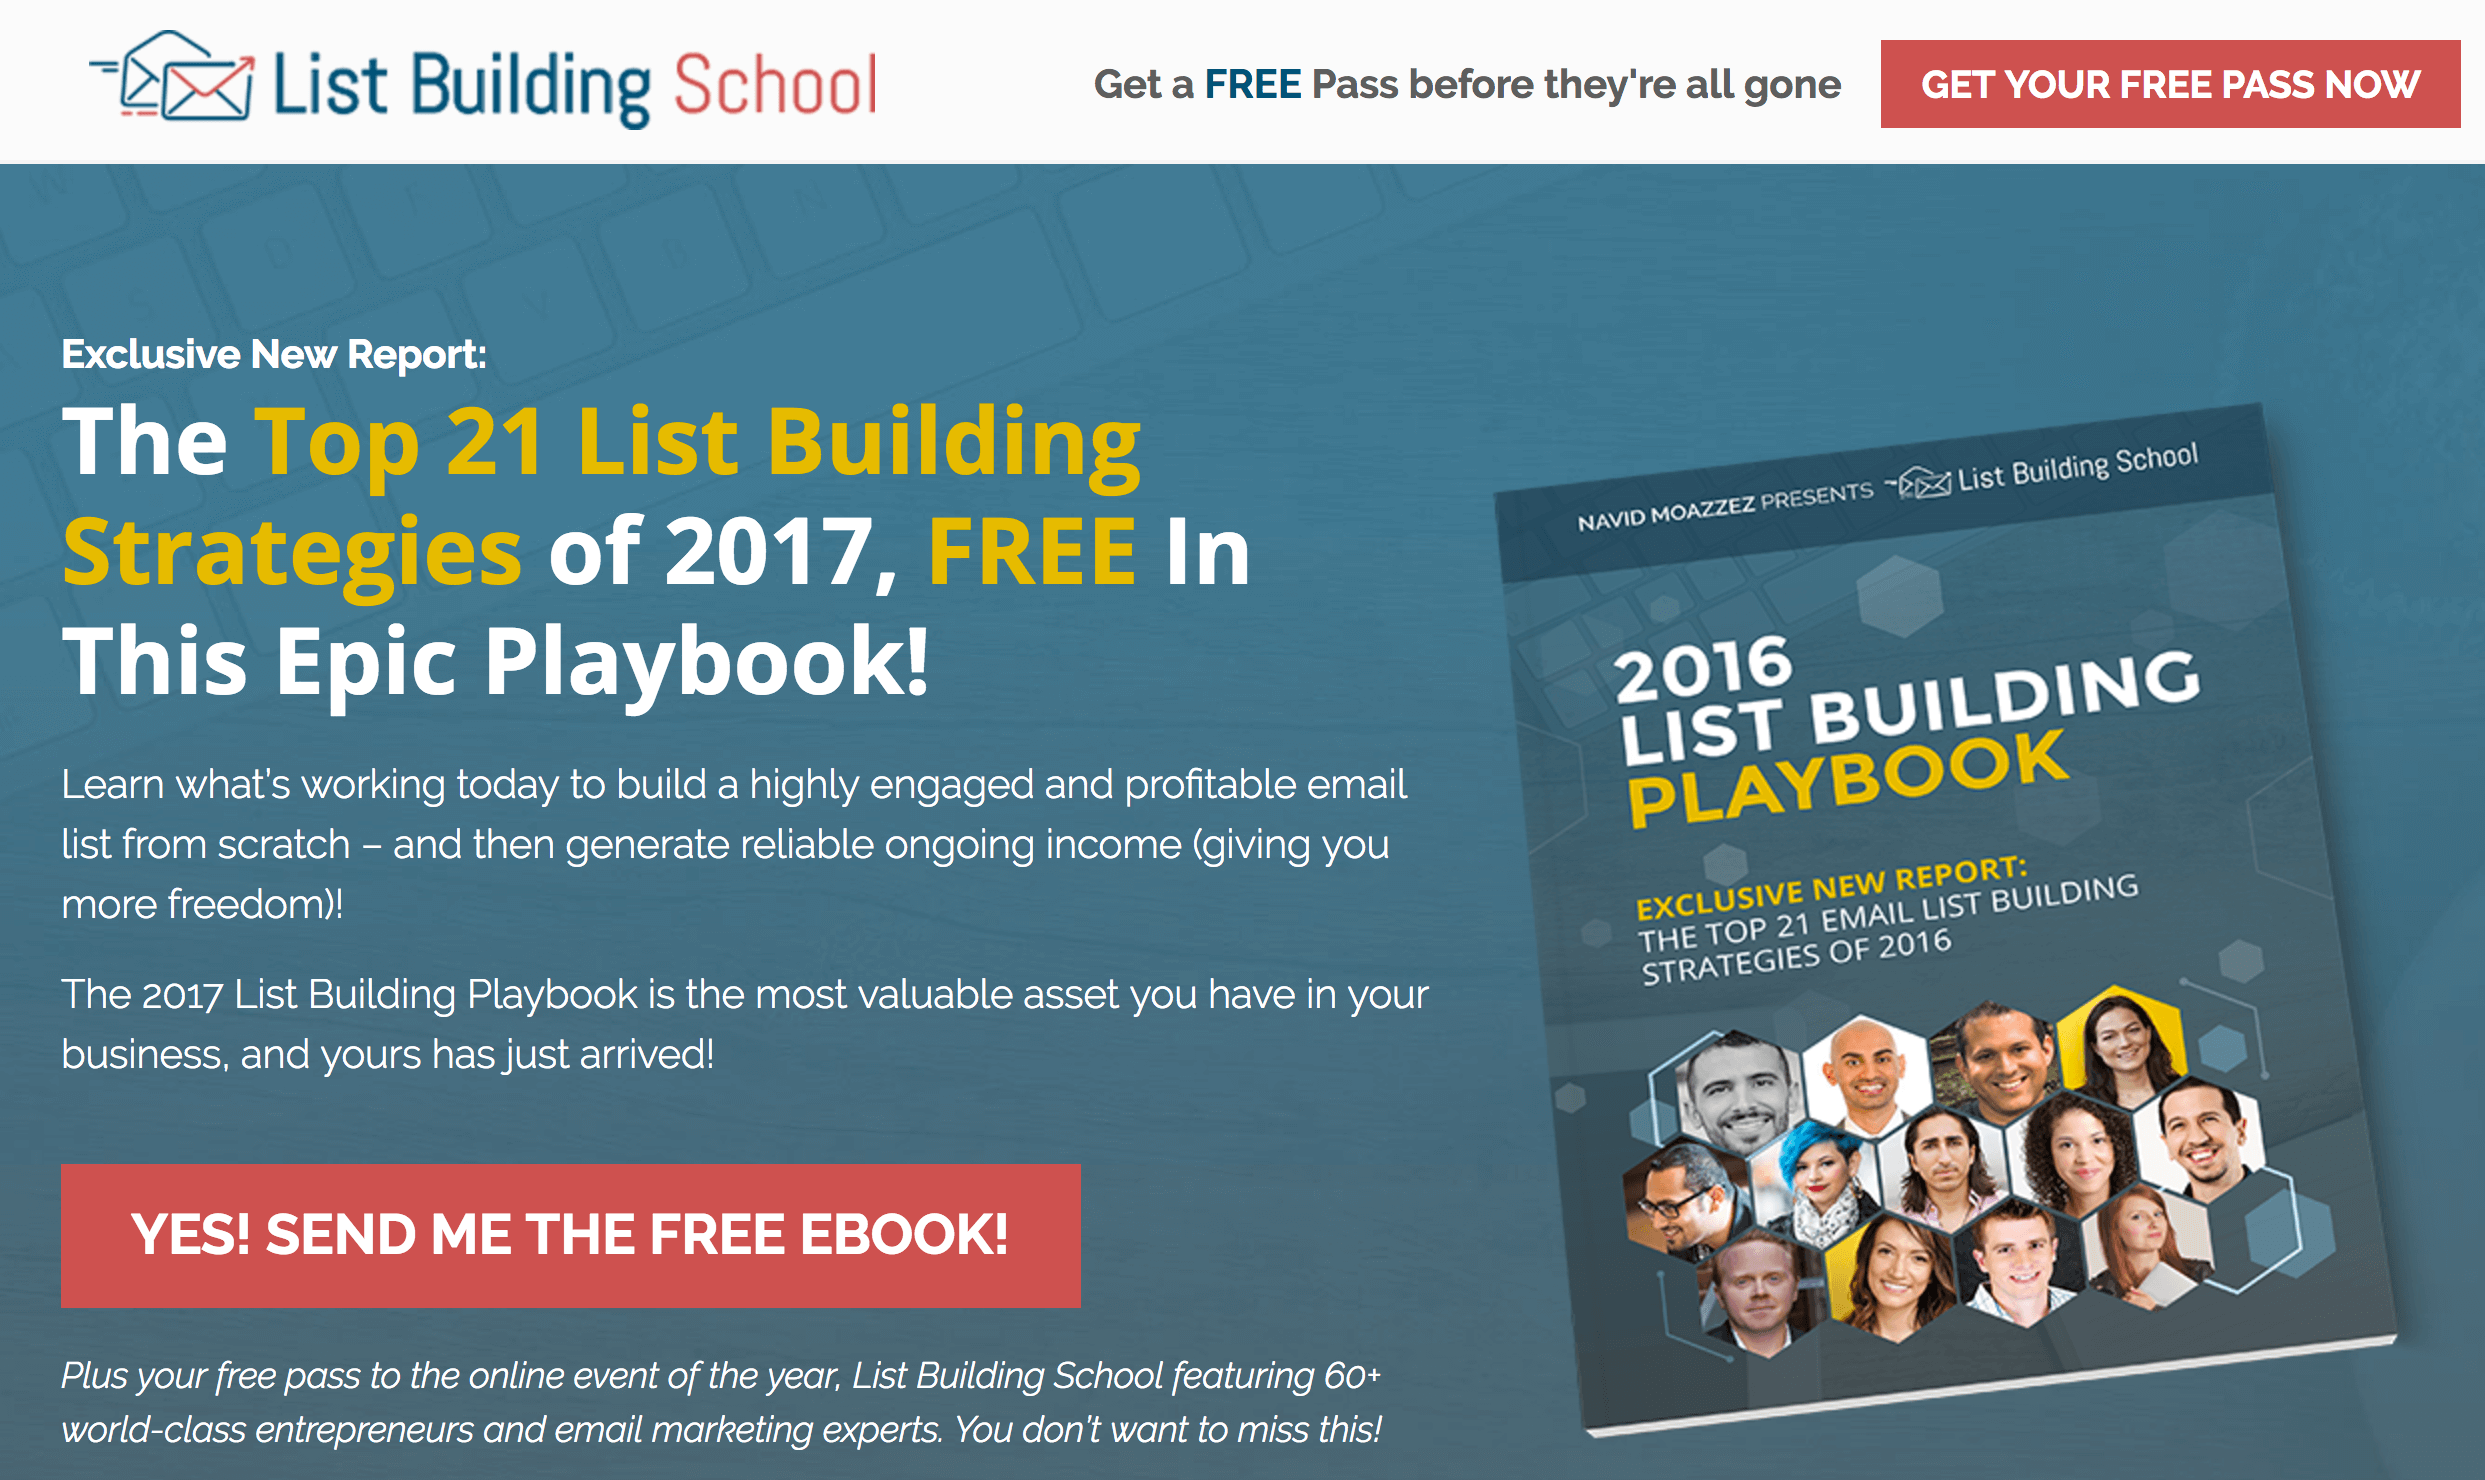 The List Building School landing page.